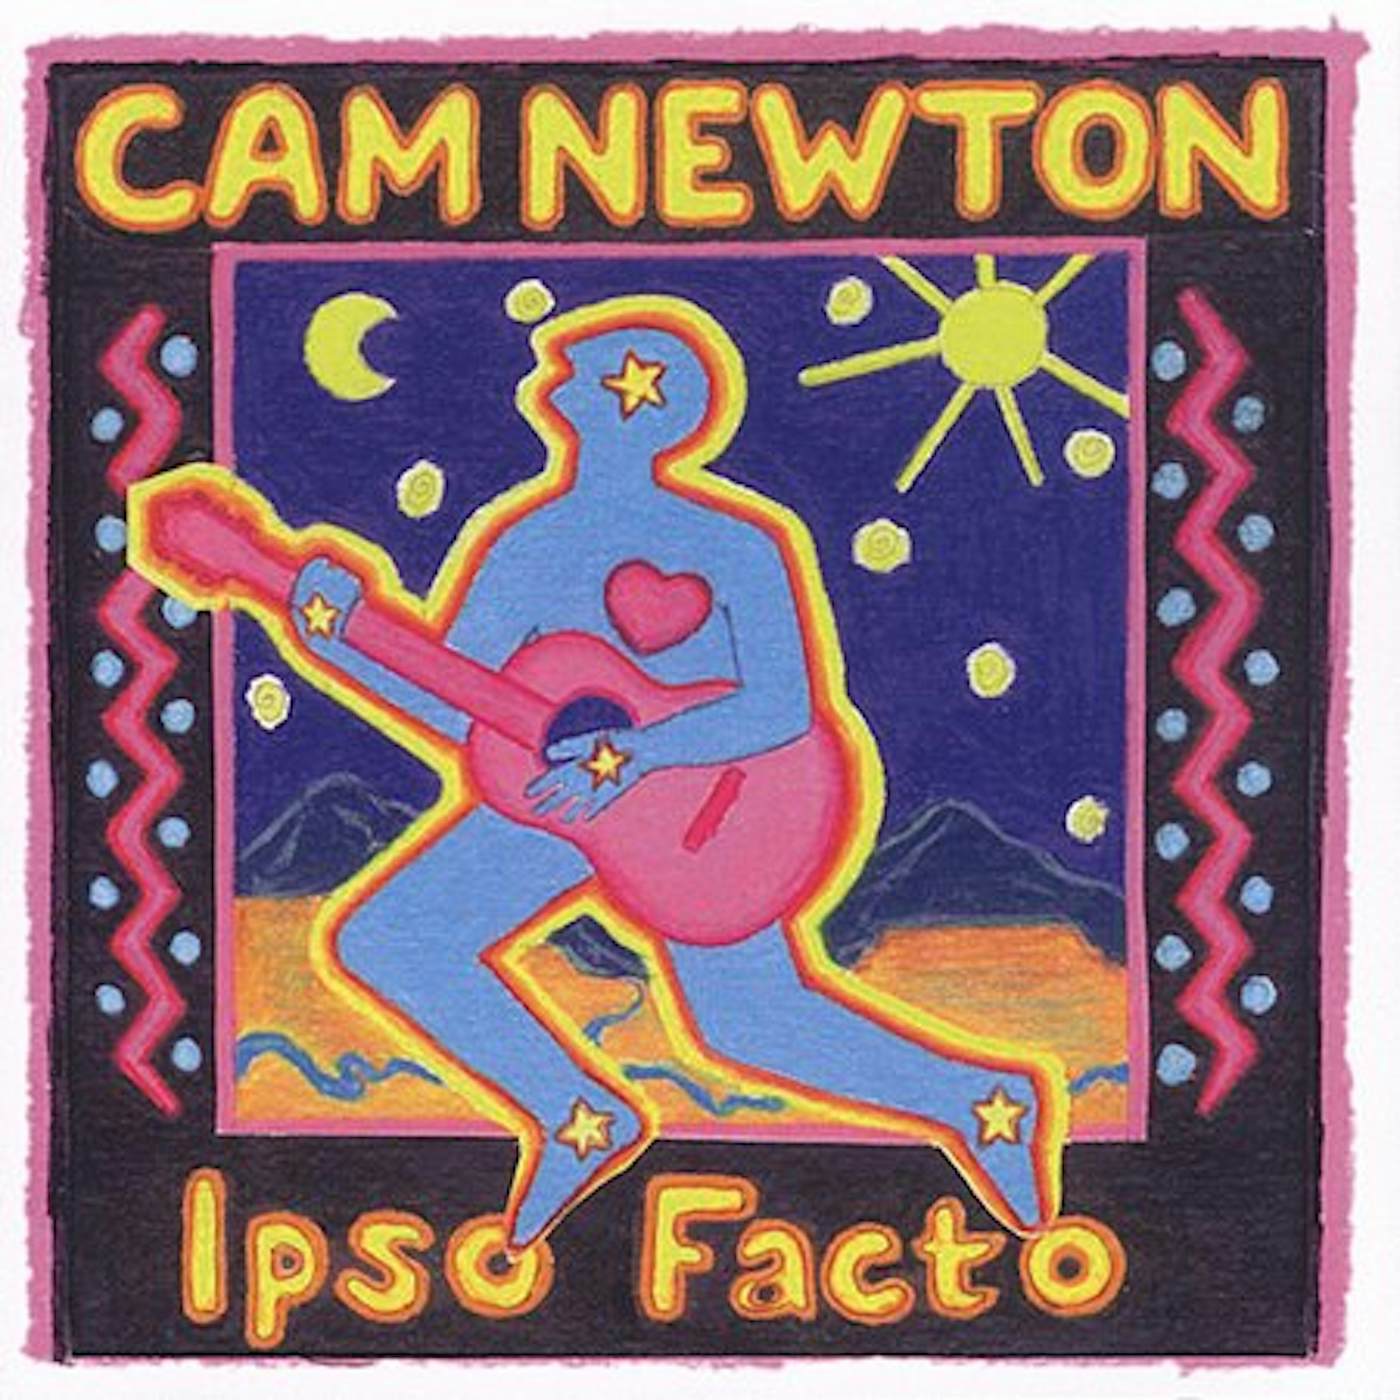 Cam Newton IPSO FACTO CD